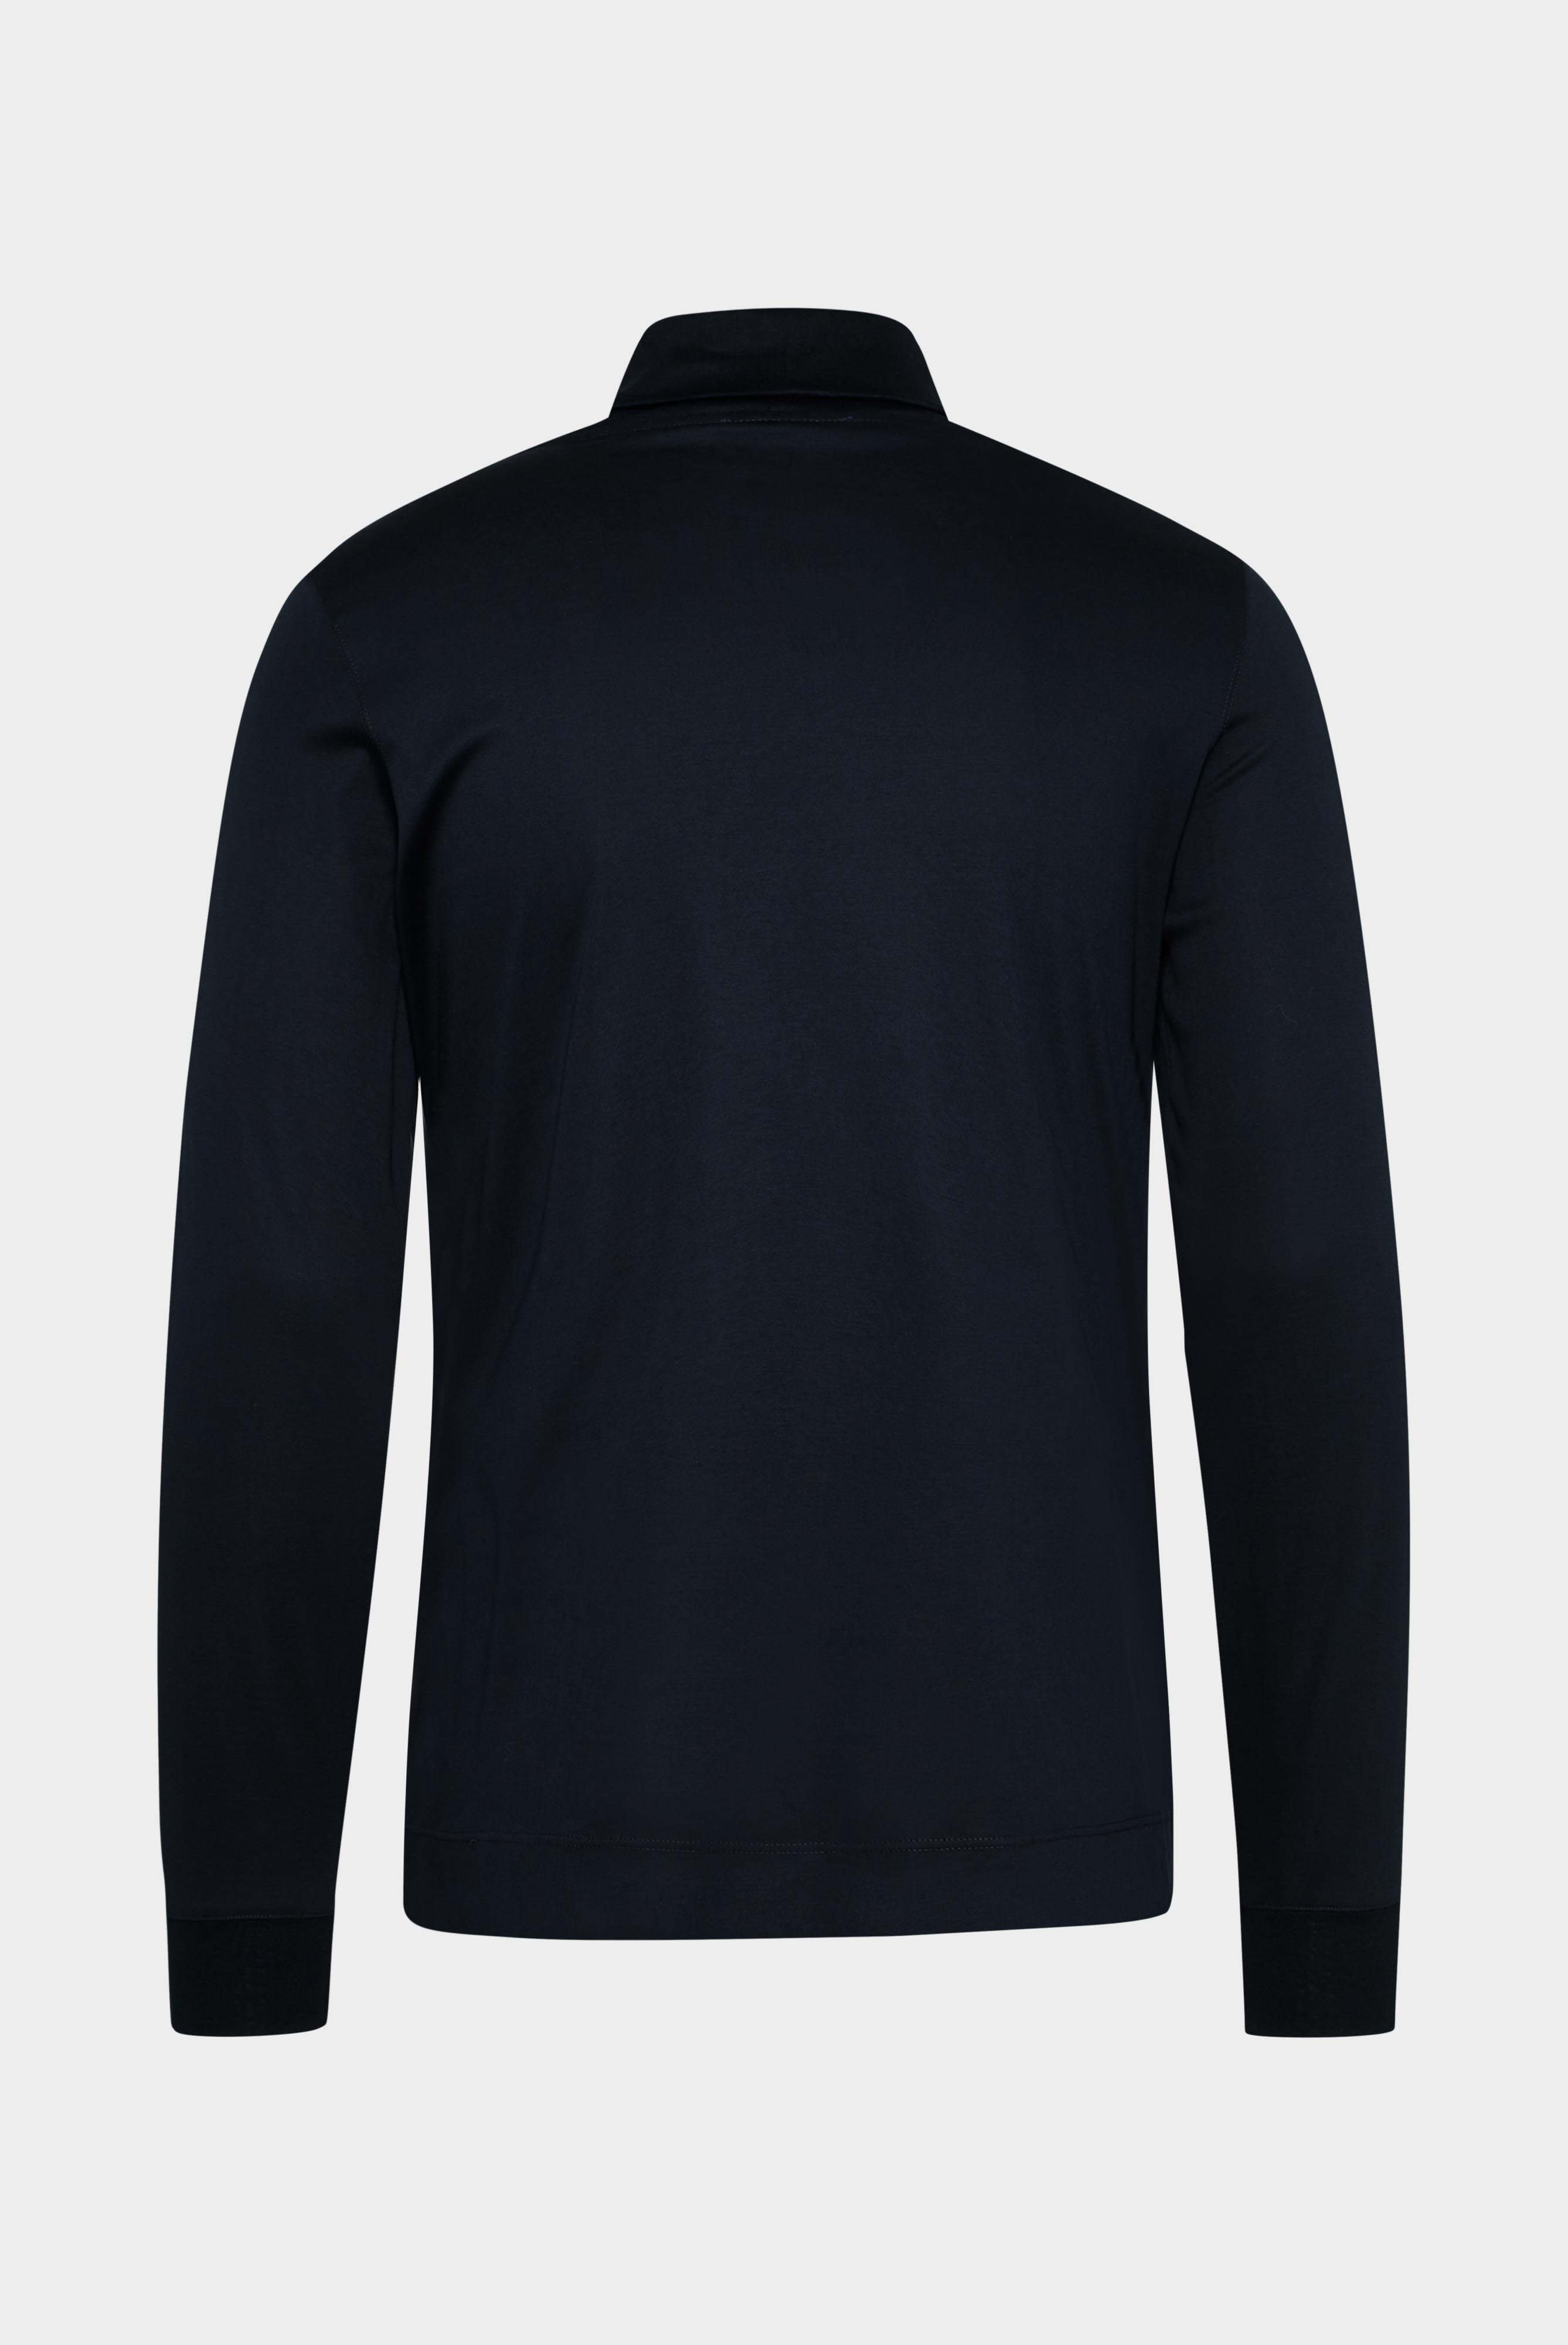 T-Shirts+Swiss Cotton Jersey Turtleneck Shirt+20.1719.UX.180031.790.S